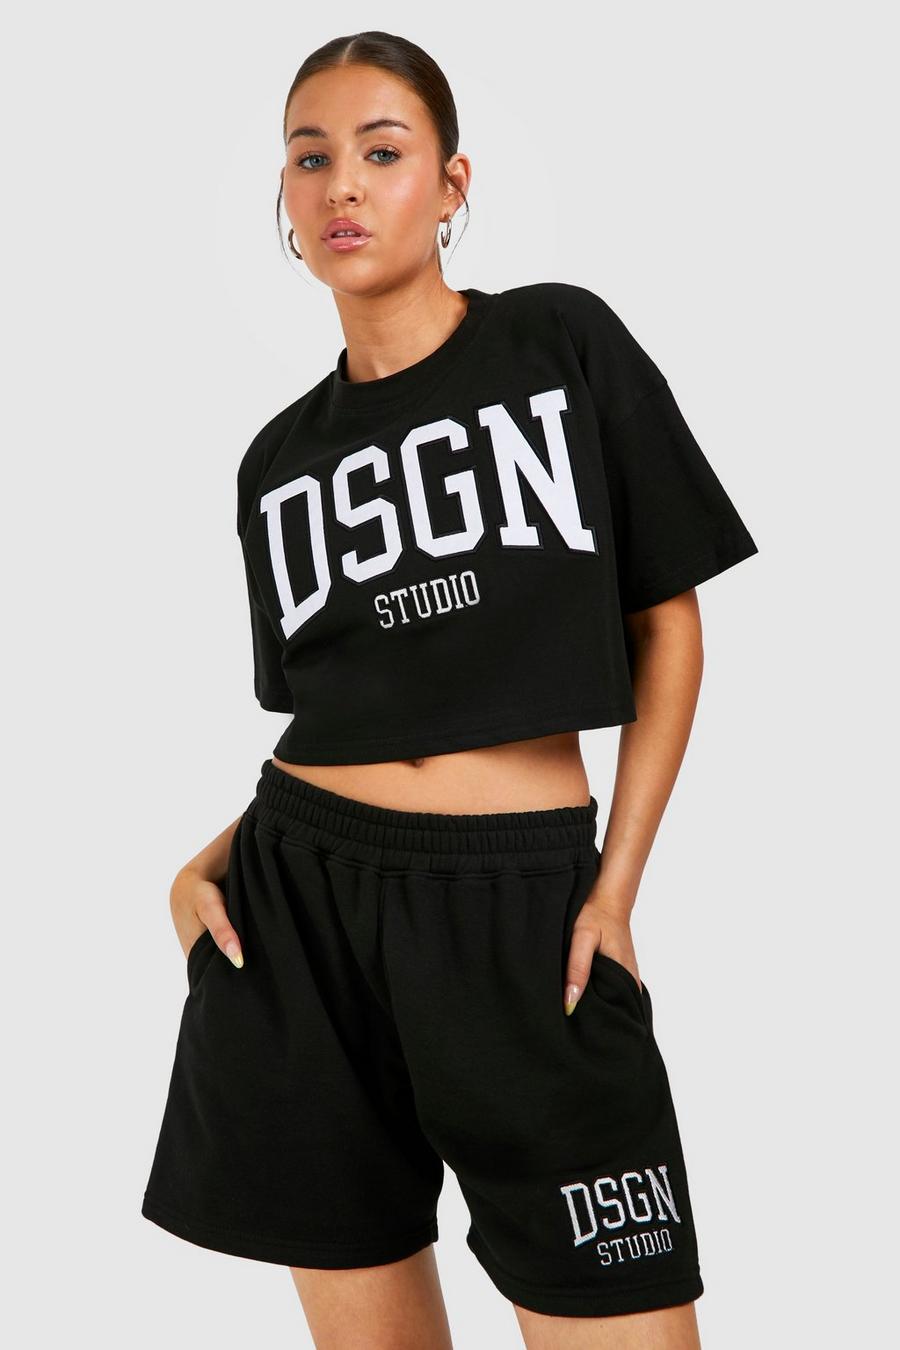 Kurzes T-Shirt mit Dsgn Studio Applikation und Shorts, Black image number 1